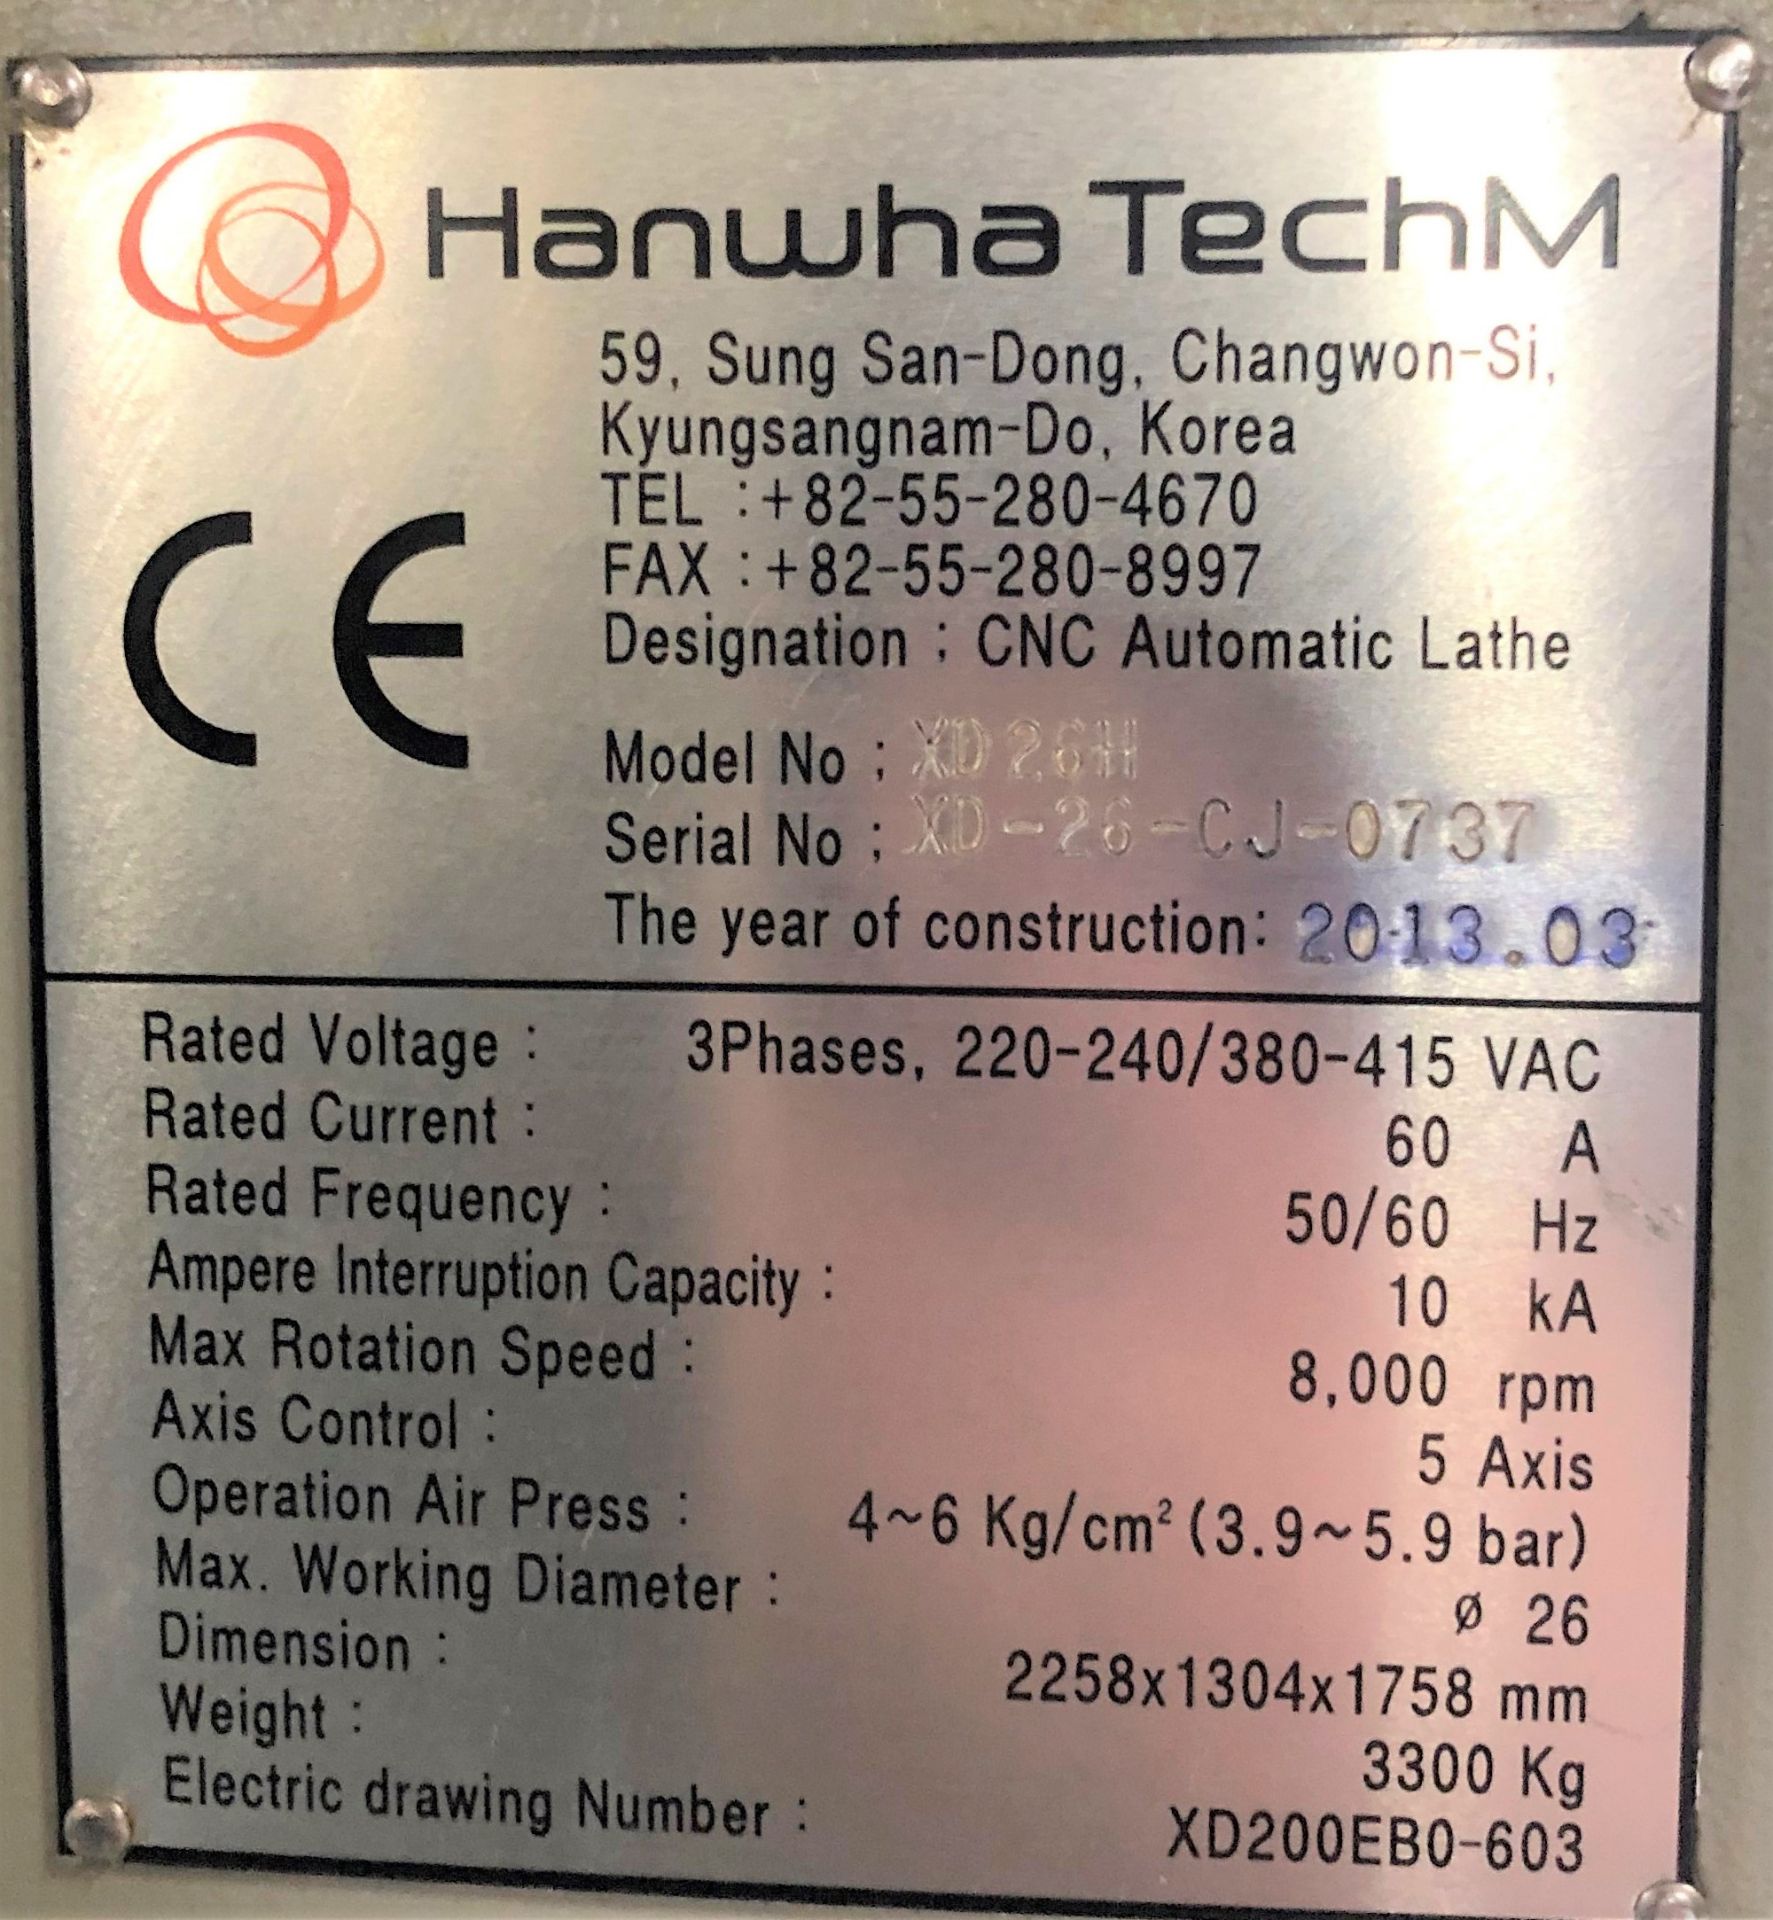 Hanwha 26mm XD26H 7-Axis CNC Swiss Lathe S/N XD-26-CJ-0737 (2013) Fanuc Hanwha-I Series CNC Control - Image 14 of 37